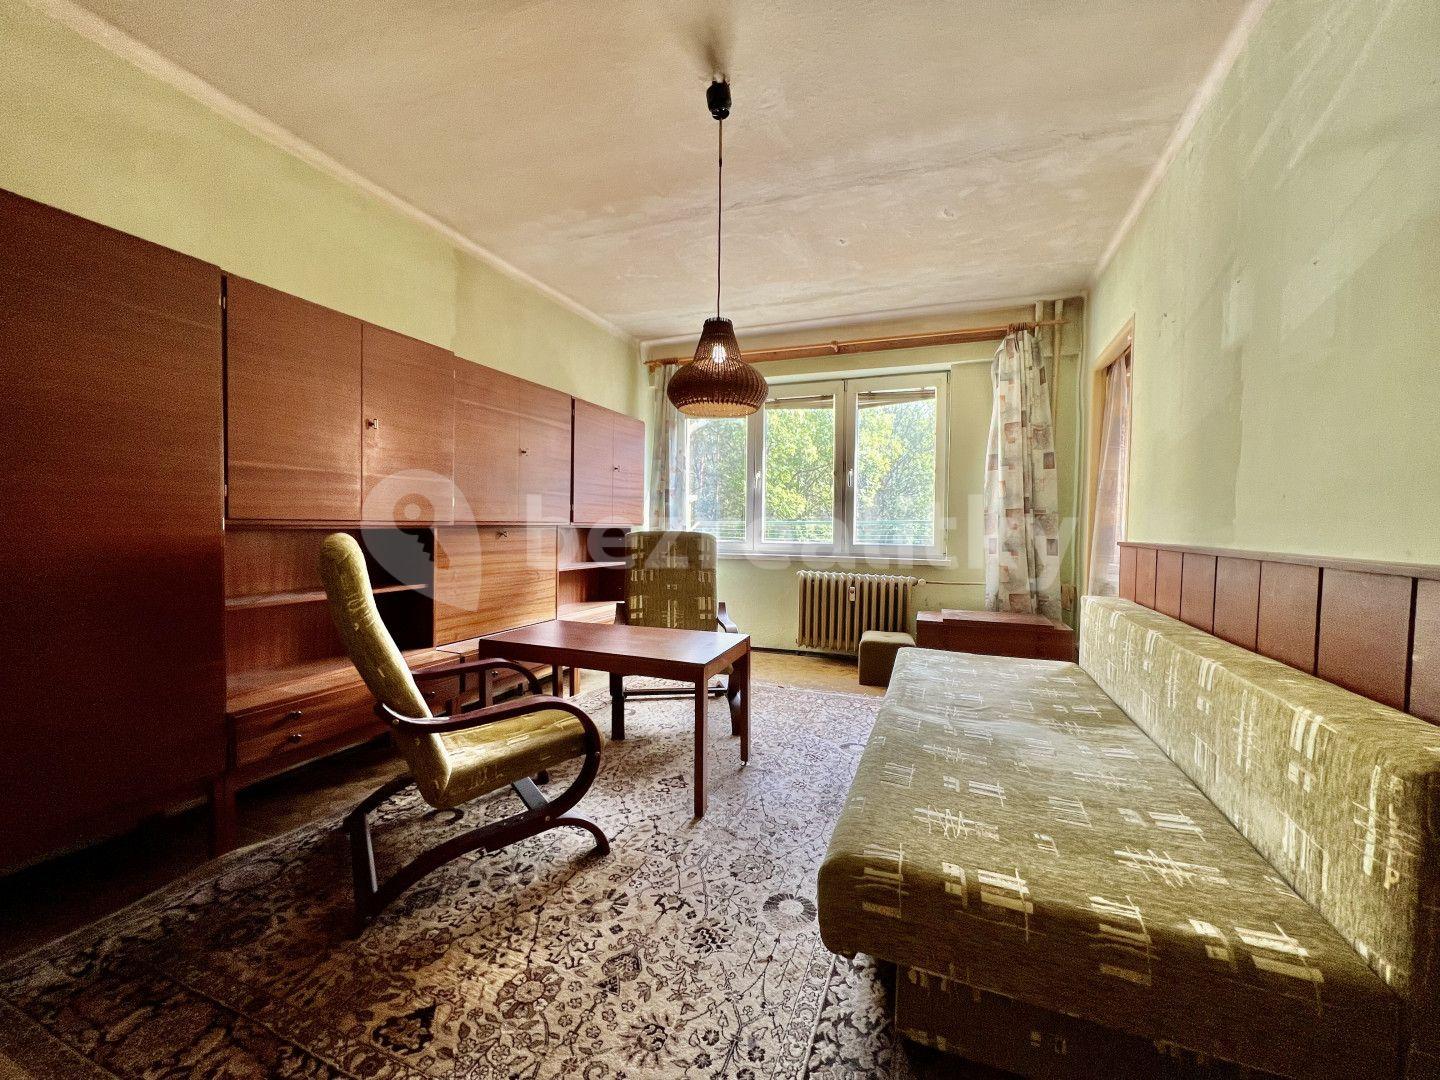 3 bedroom flat for sale, 72 m², Horova, Karviná, Moravskoslezský Region